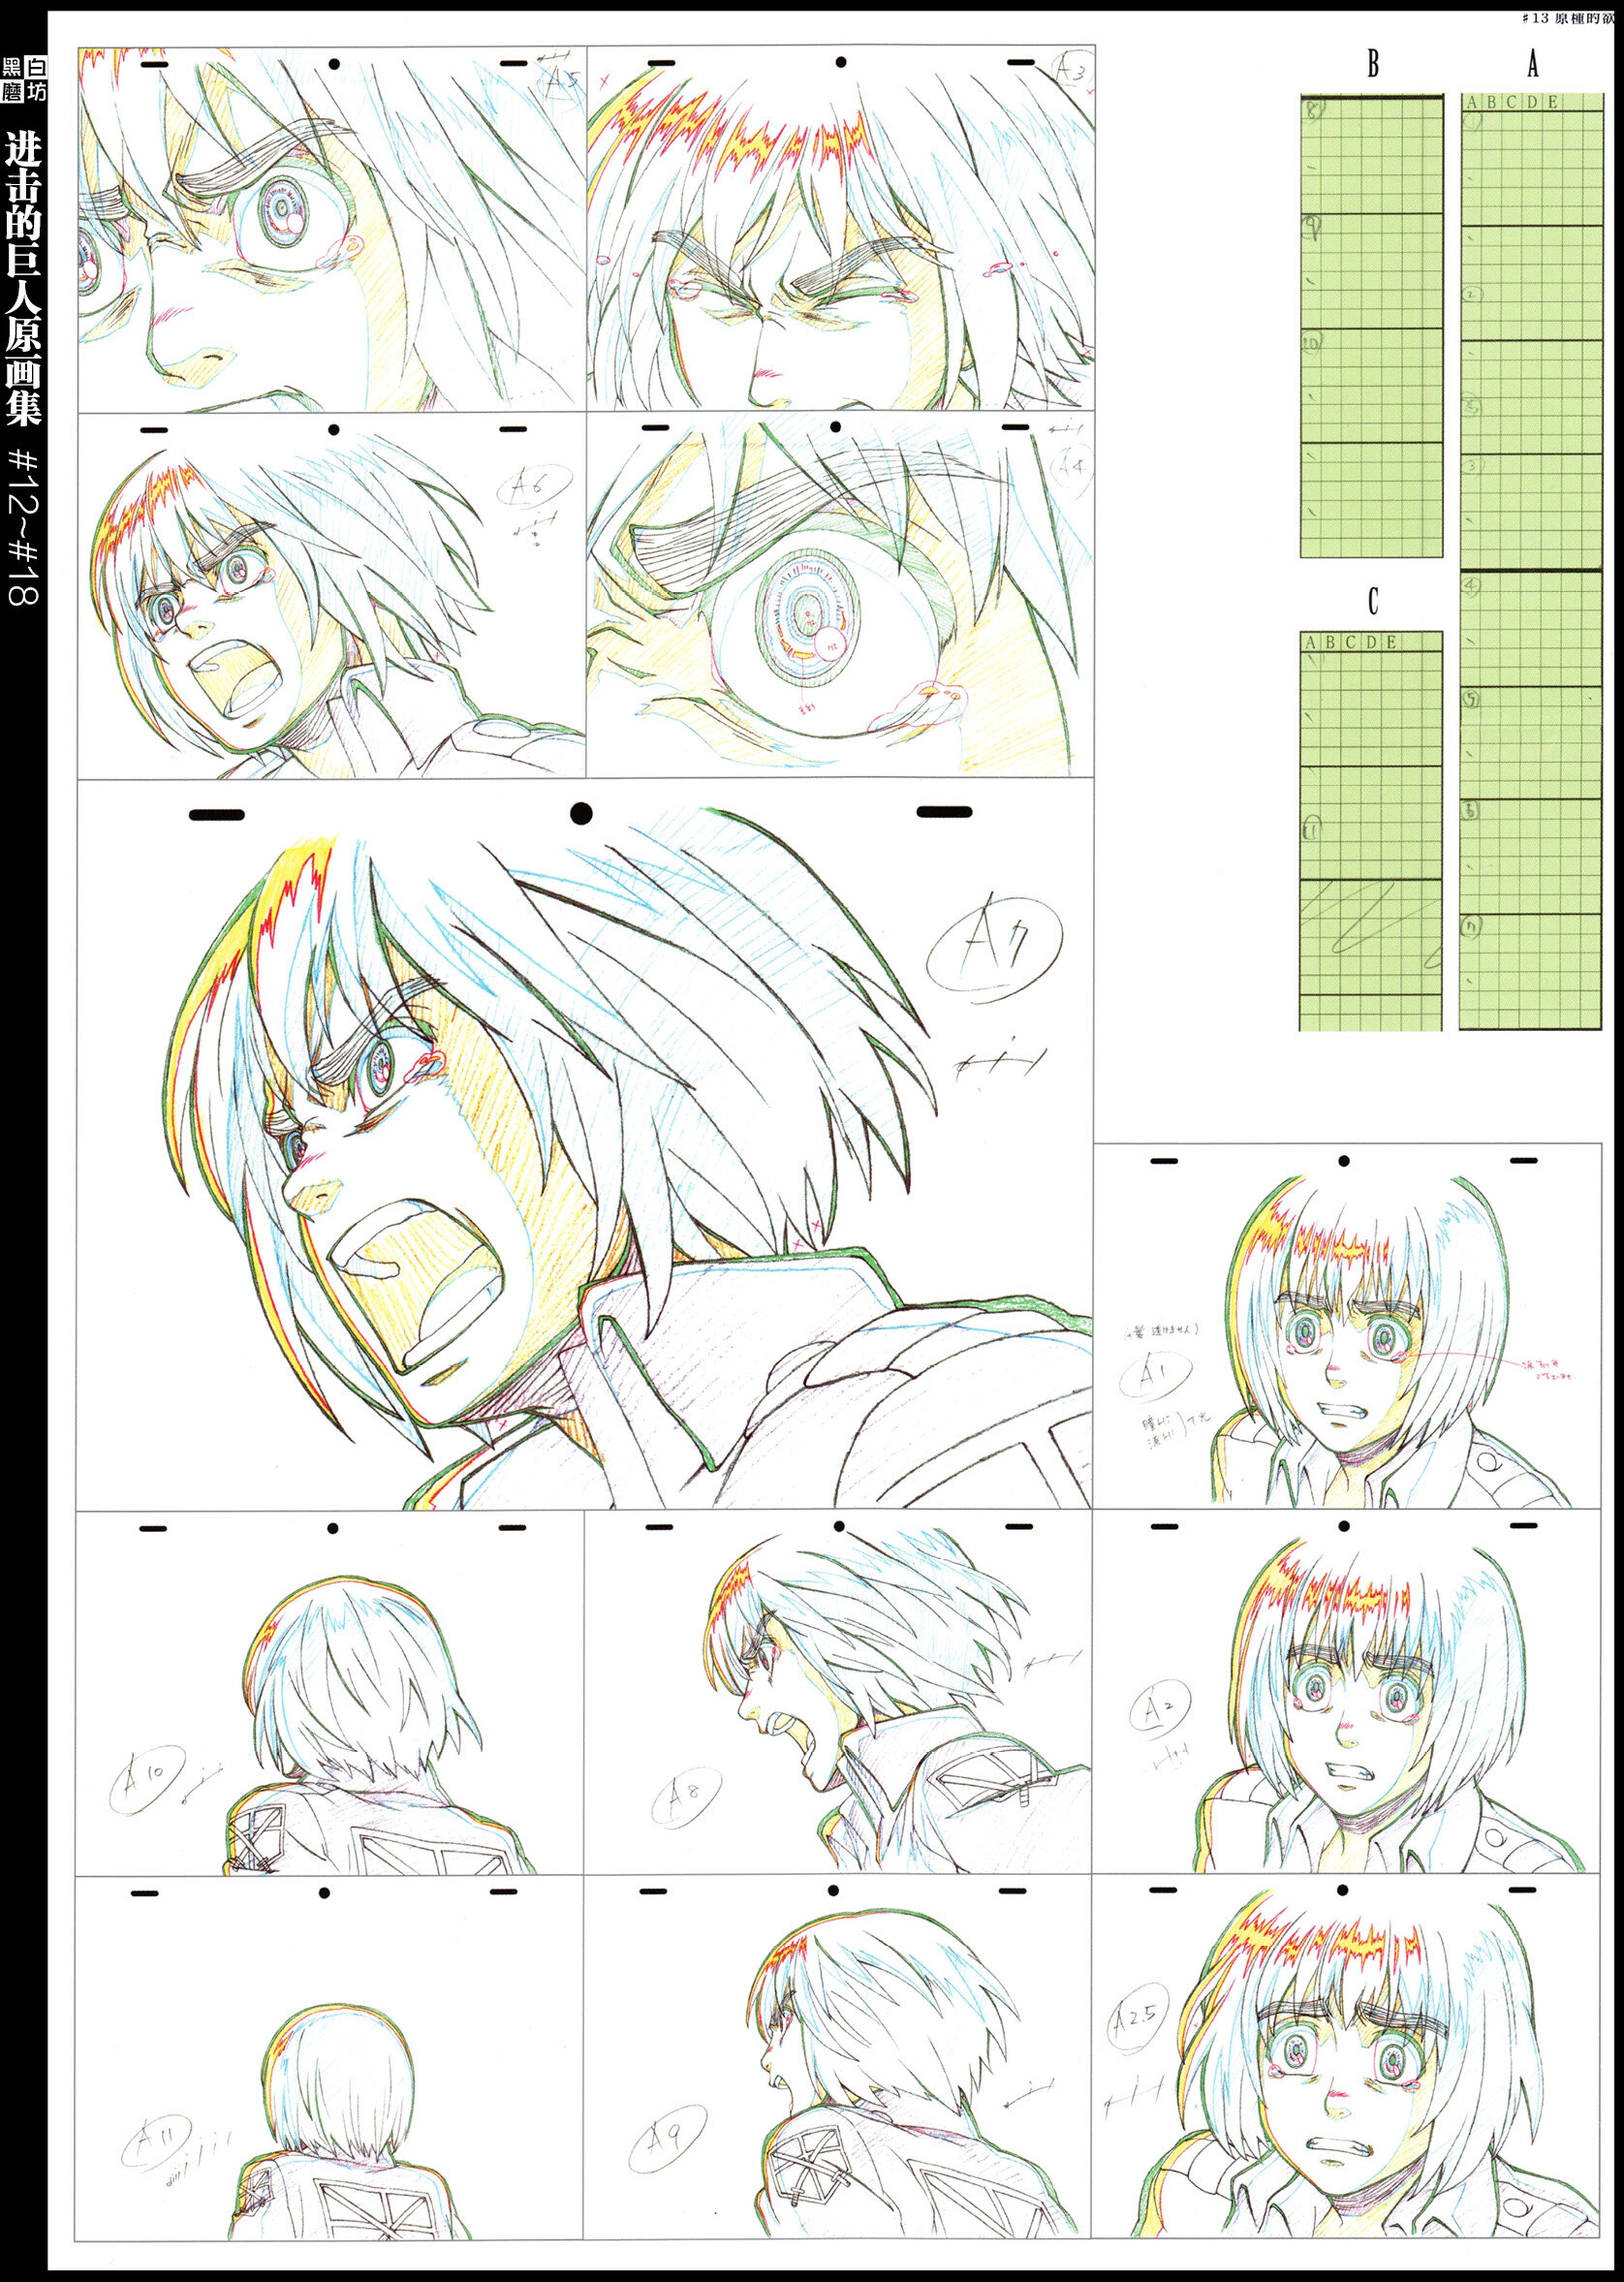 Attack On Titan - Shingeki no Kyojin - Drawing For Animation Vol. 2 -  [zwei] Art Book